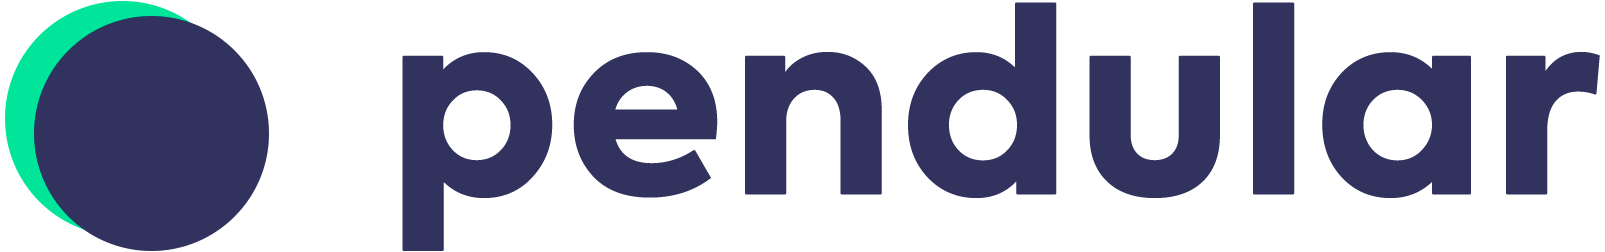 Logo pendular